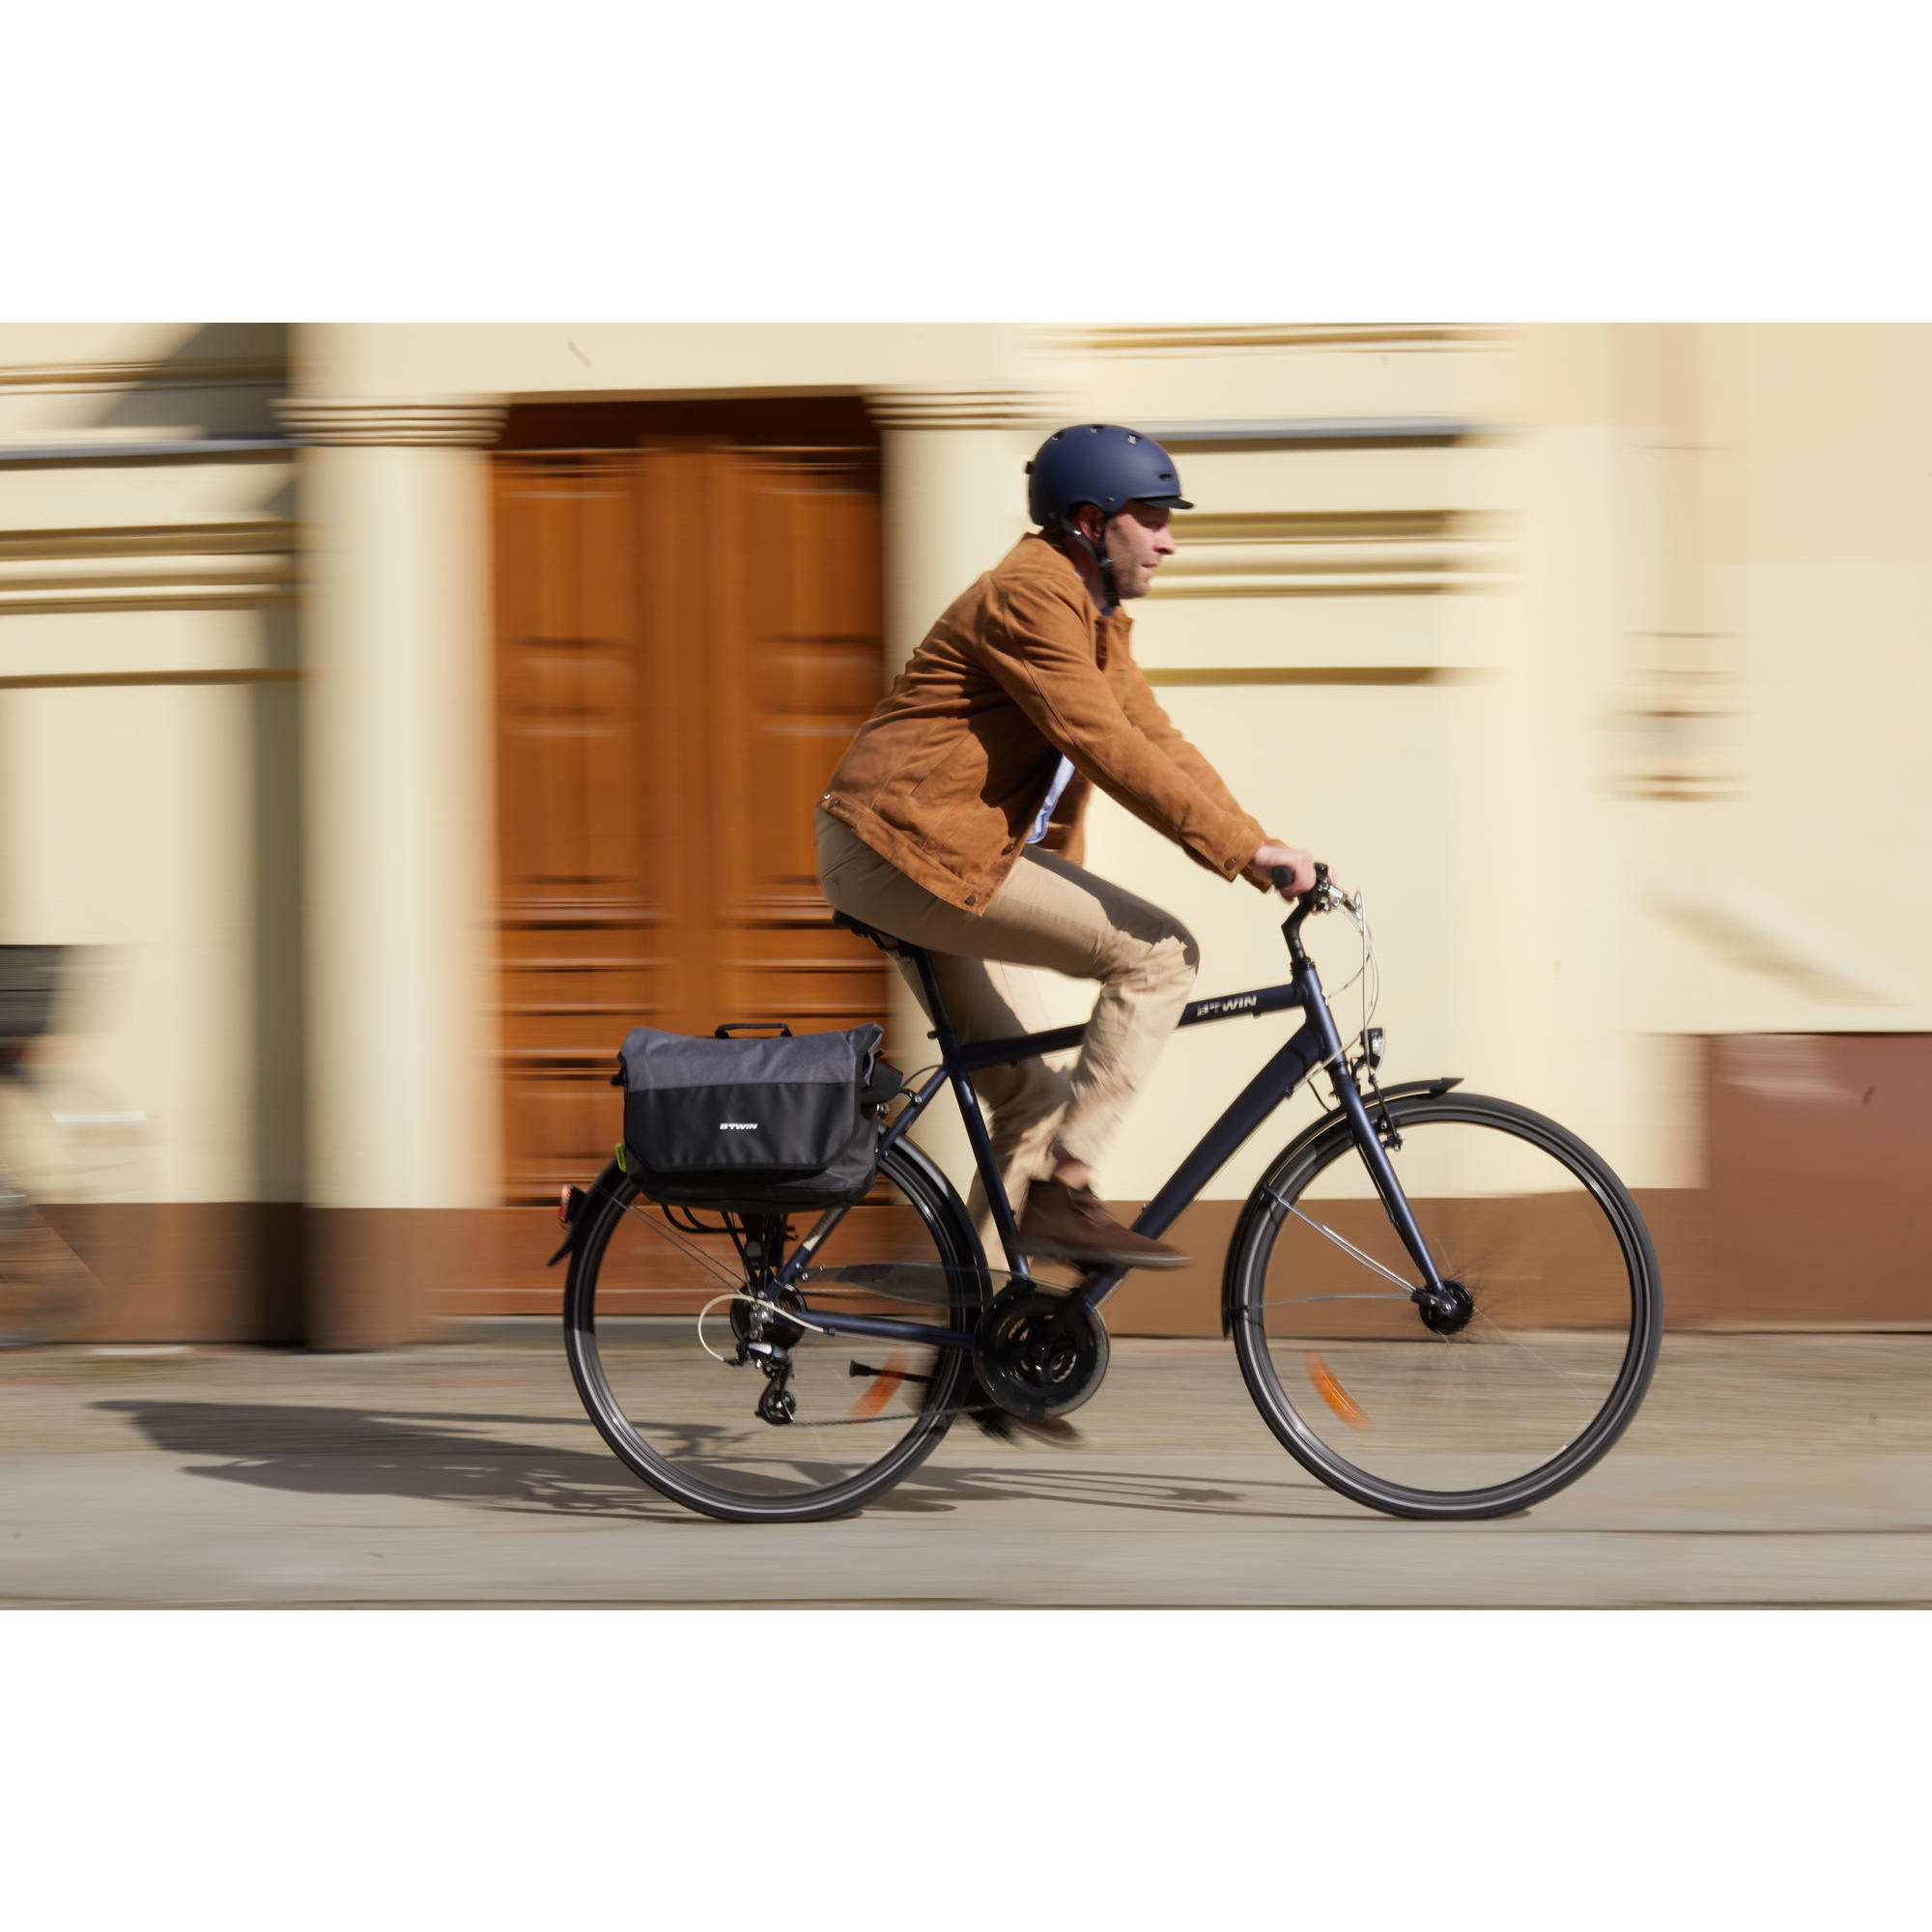 hoprider 500 long distance city bike